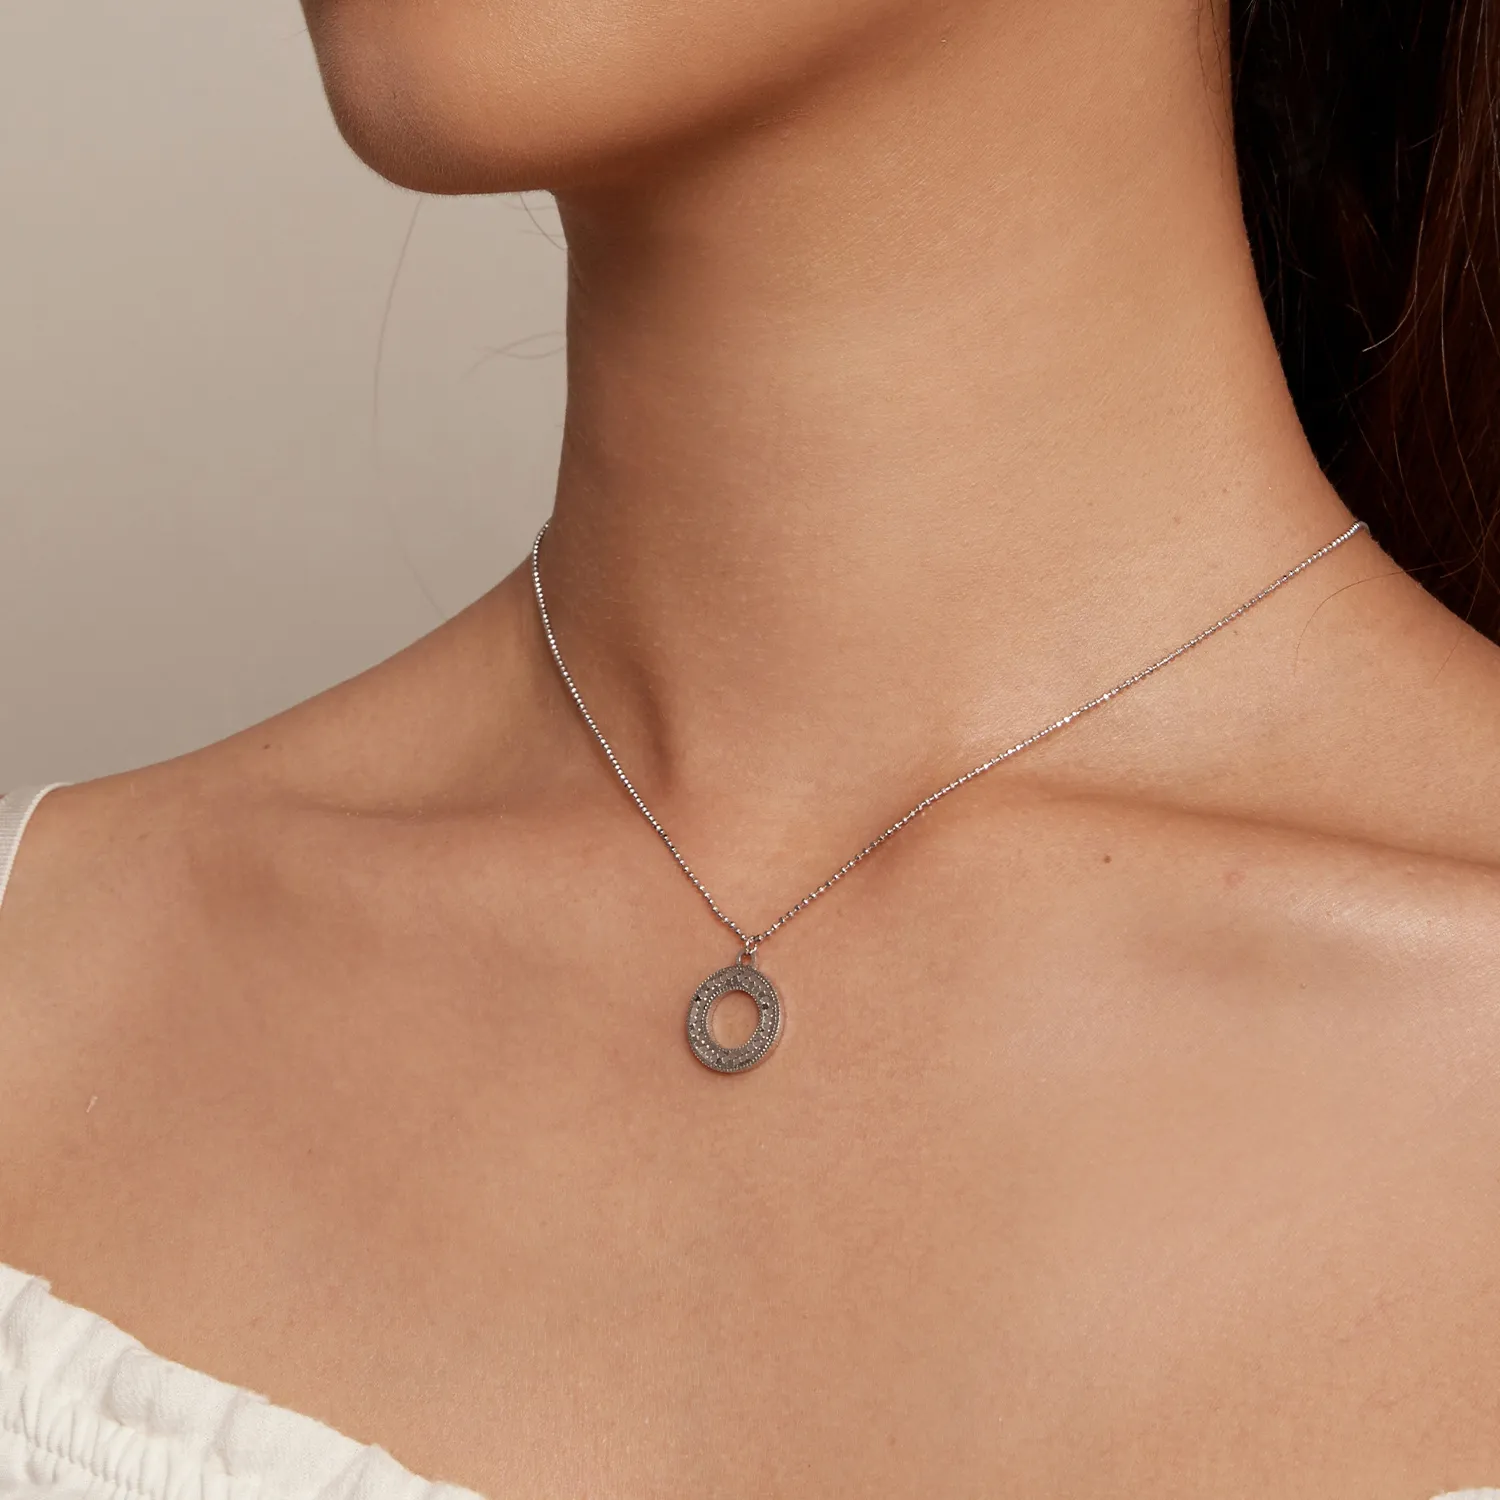 Pandora Style Circle Necklace - BSN343